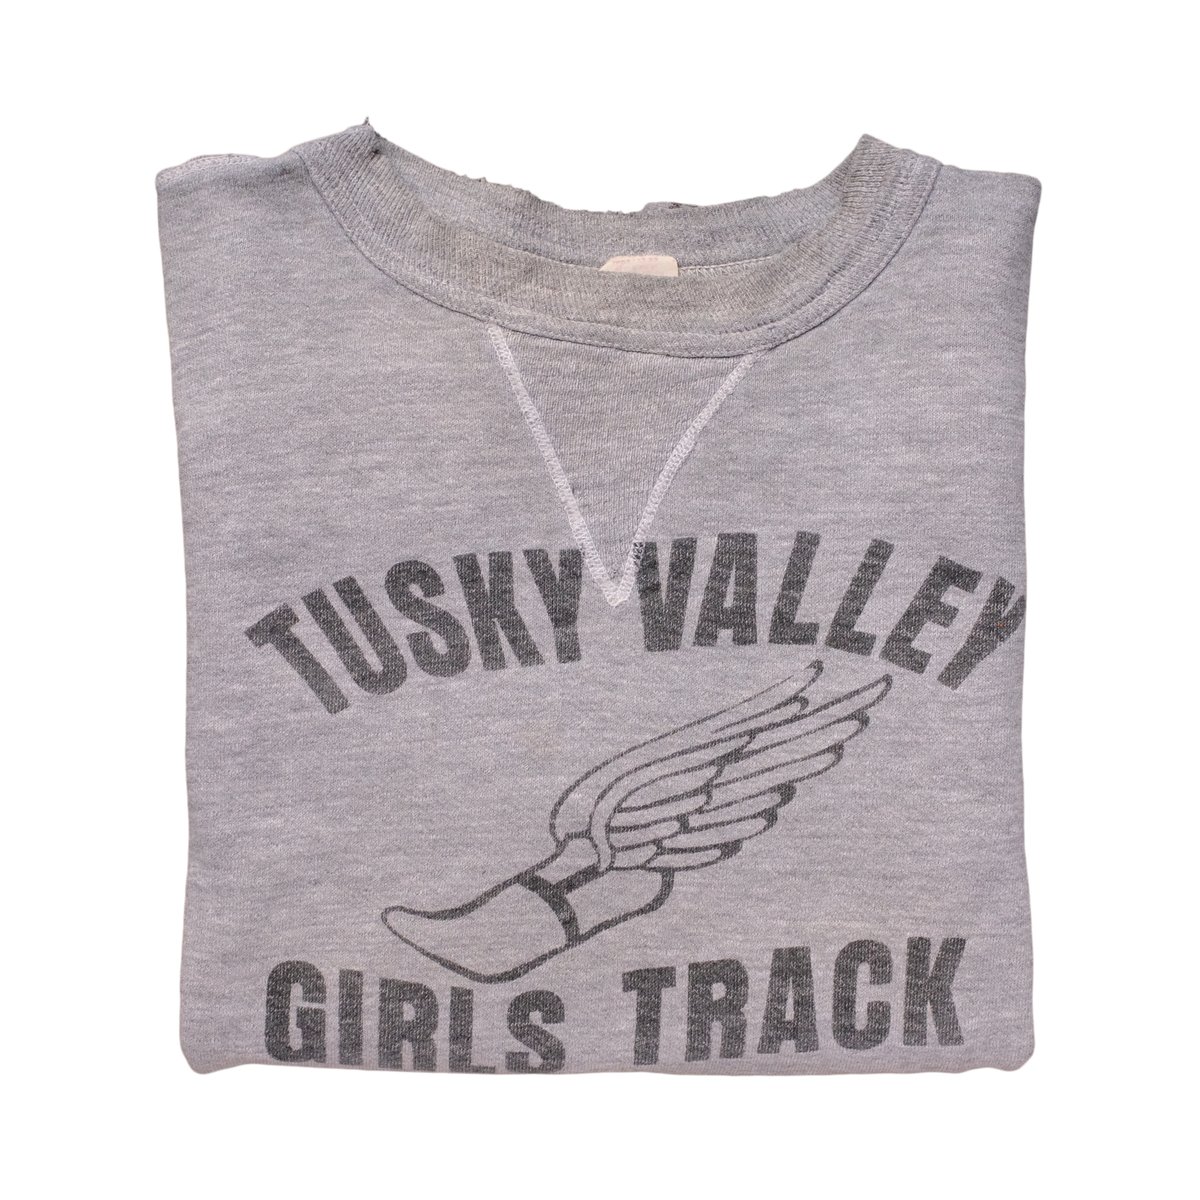 Image of Vintage 1960's Tusky Valley Girls Track Sweatshirt